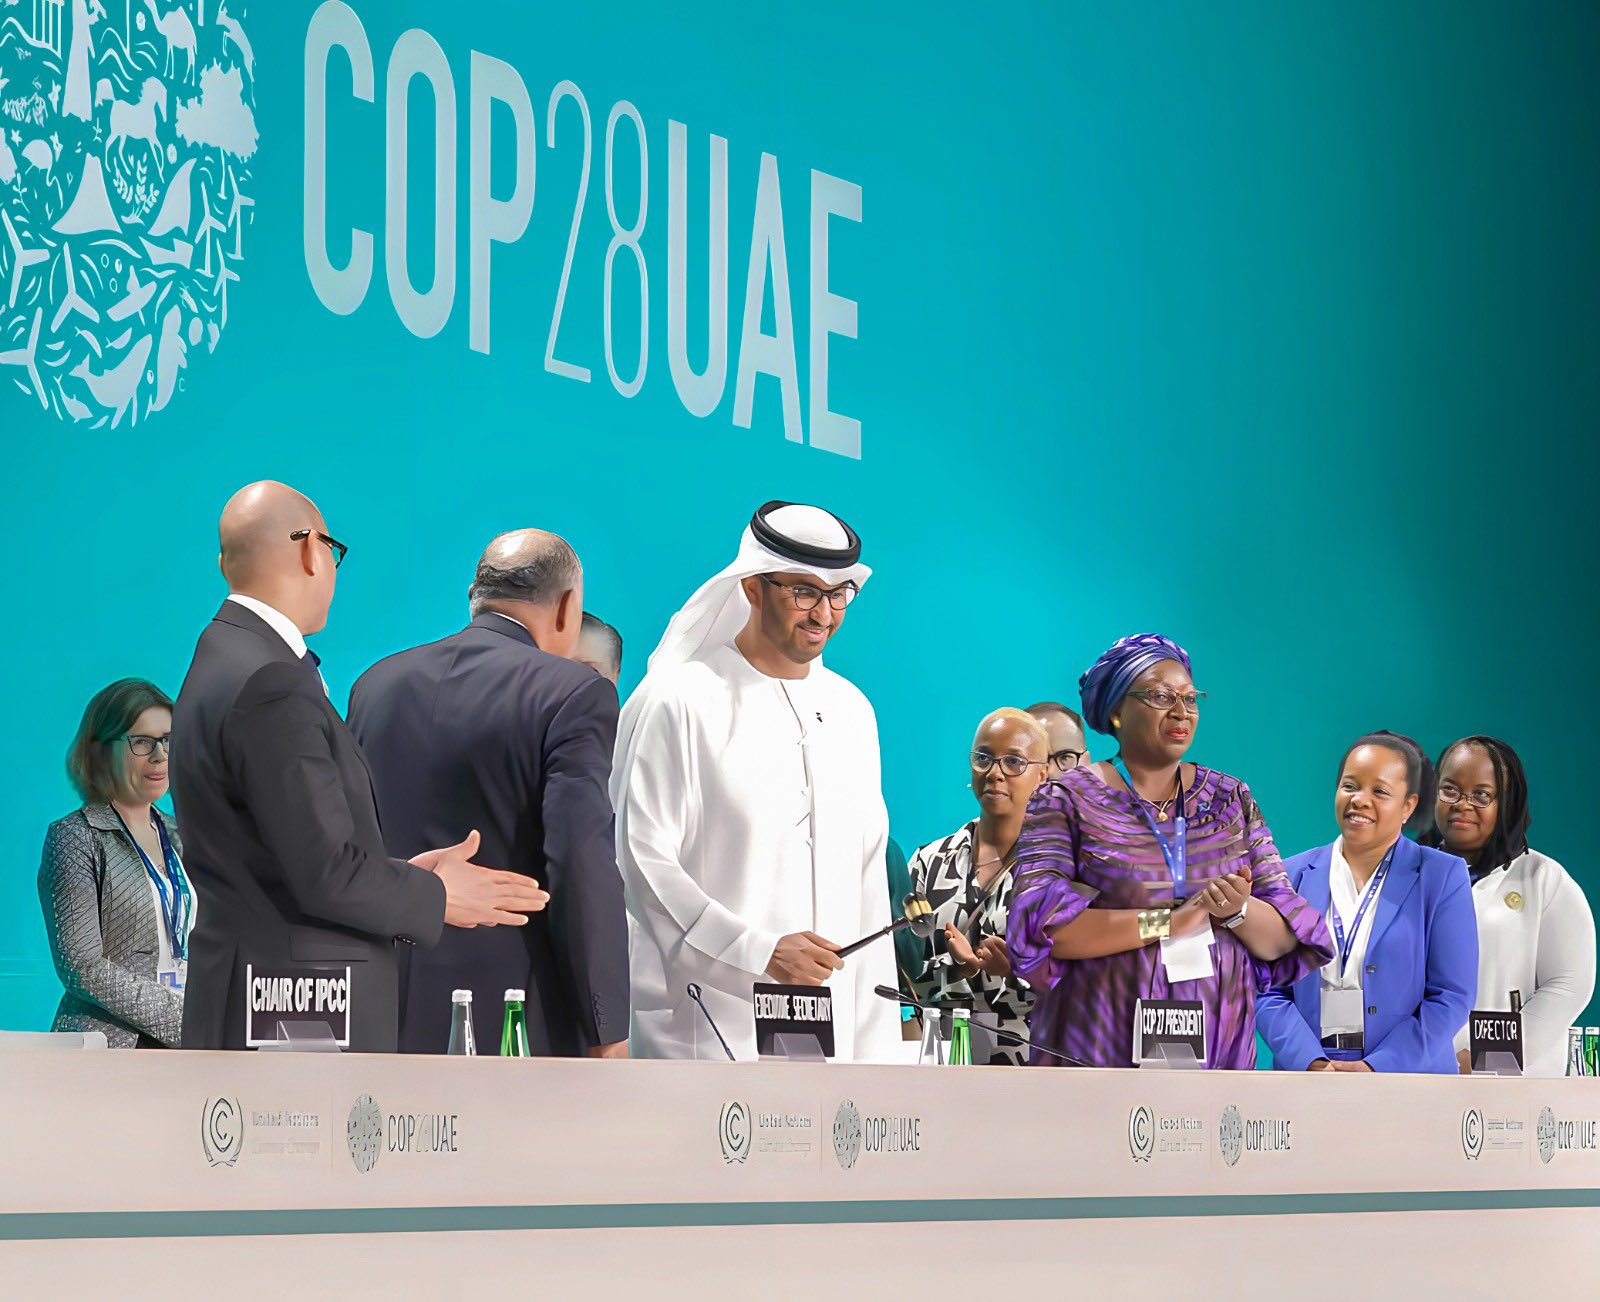 UN Climate Change Conference 2023 (COP 28) - International Union of  Architects